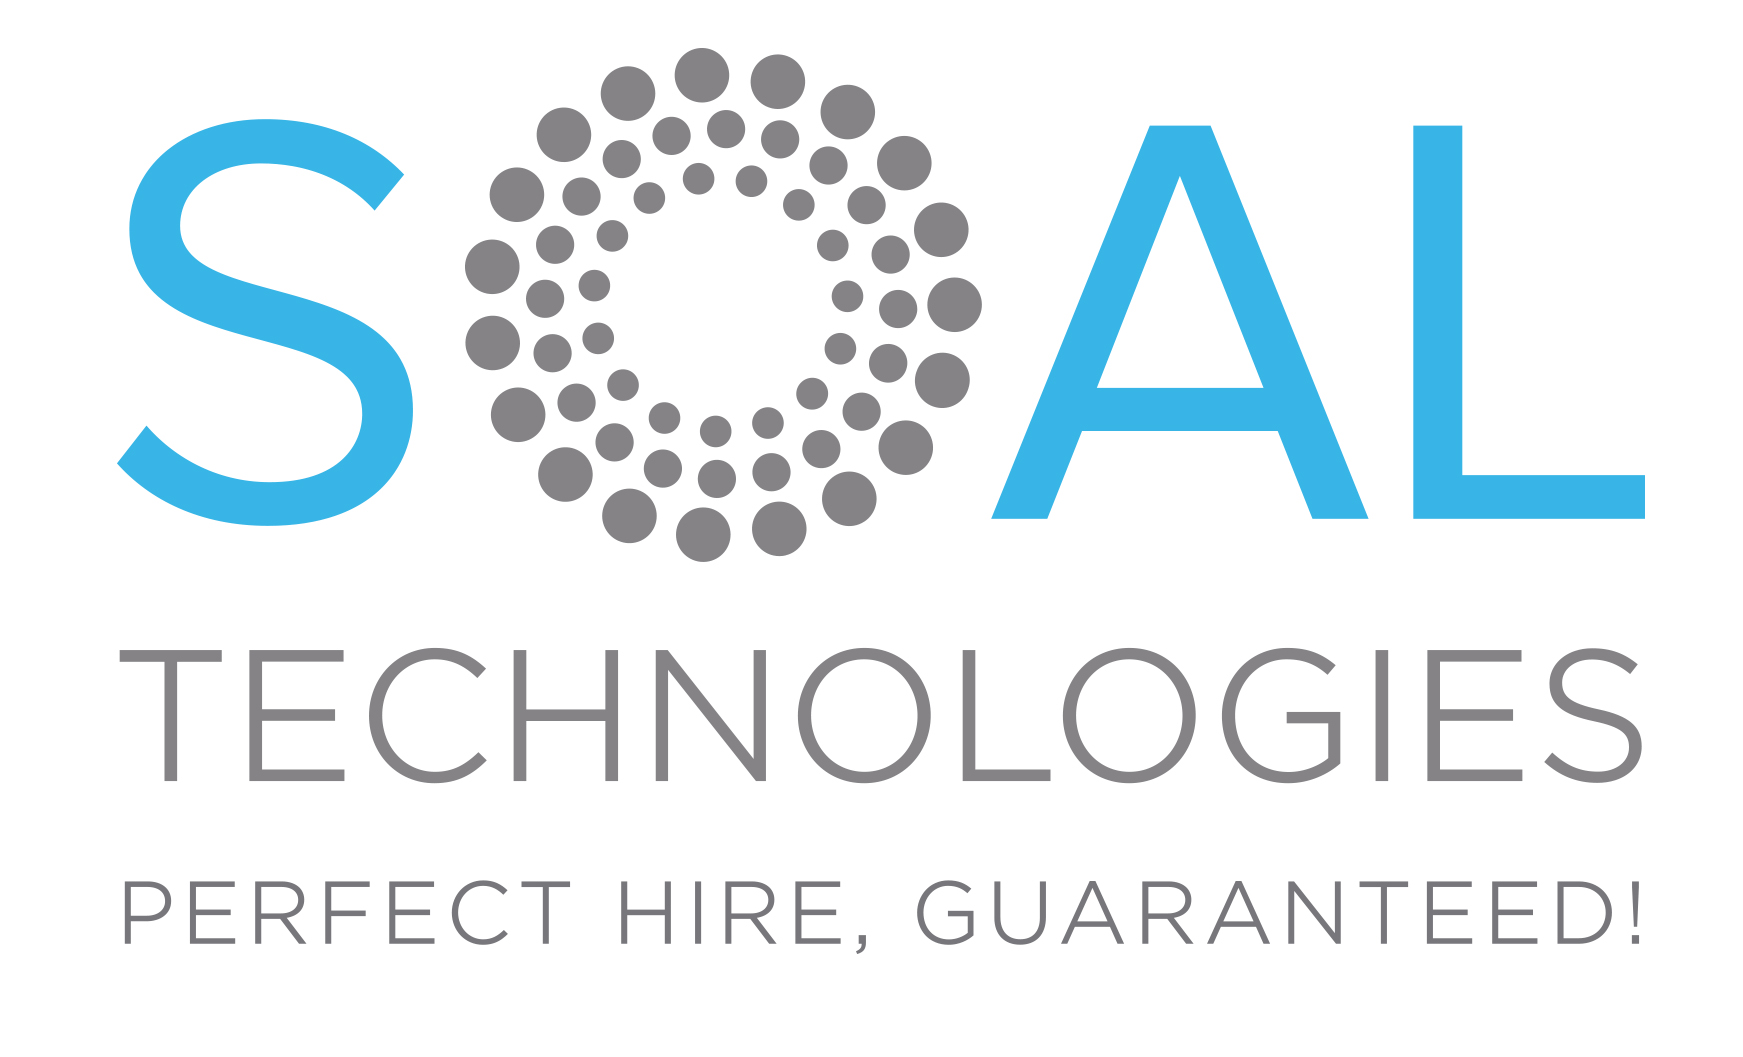 SOAL Technologies logo